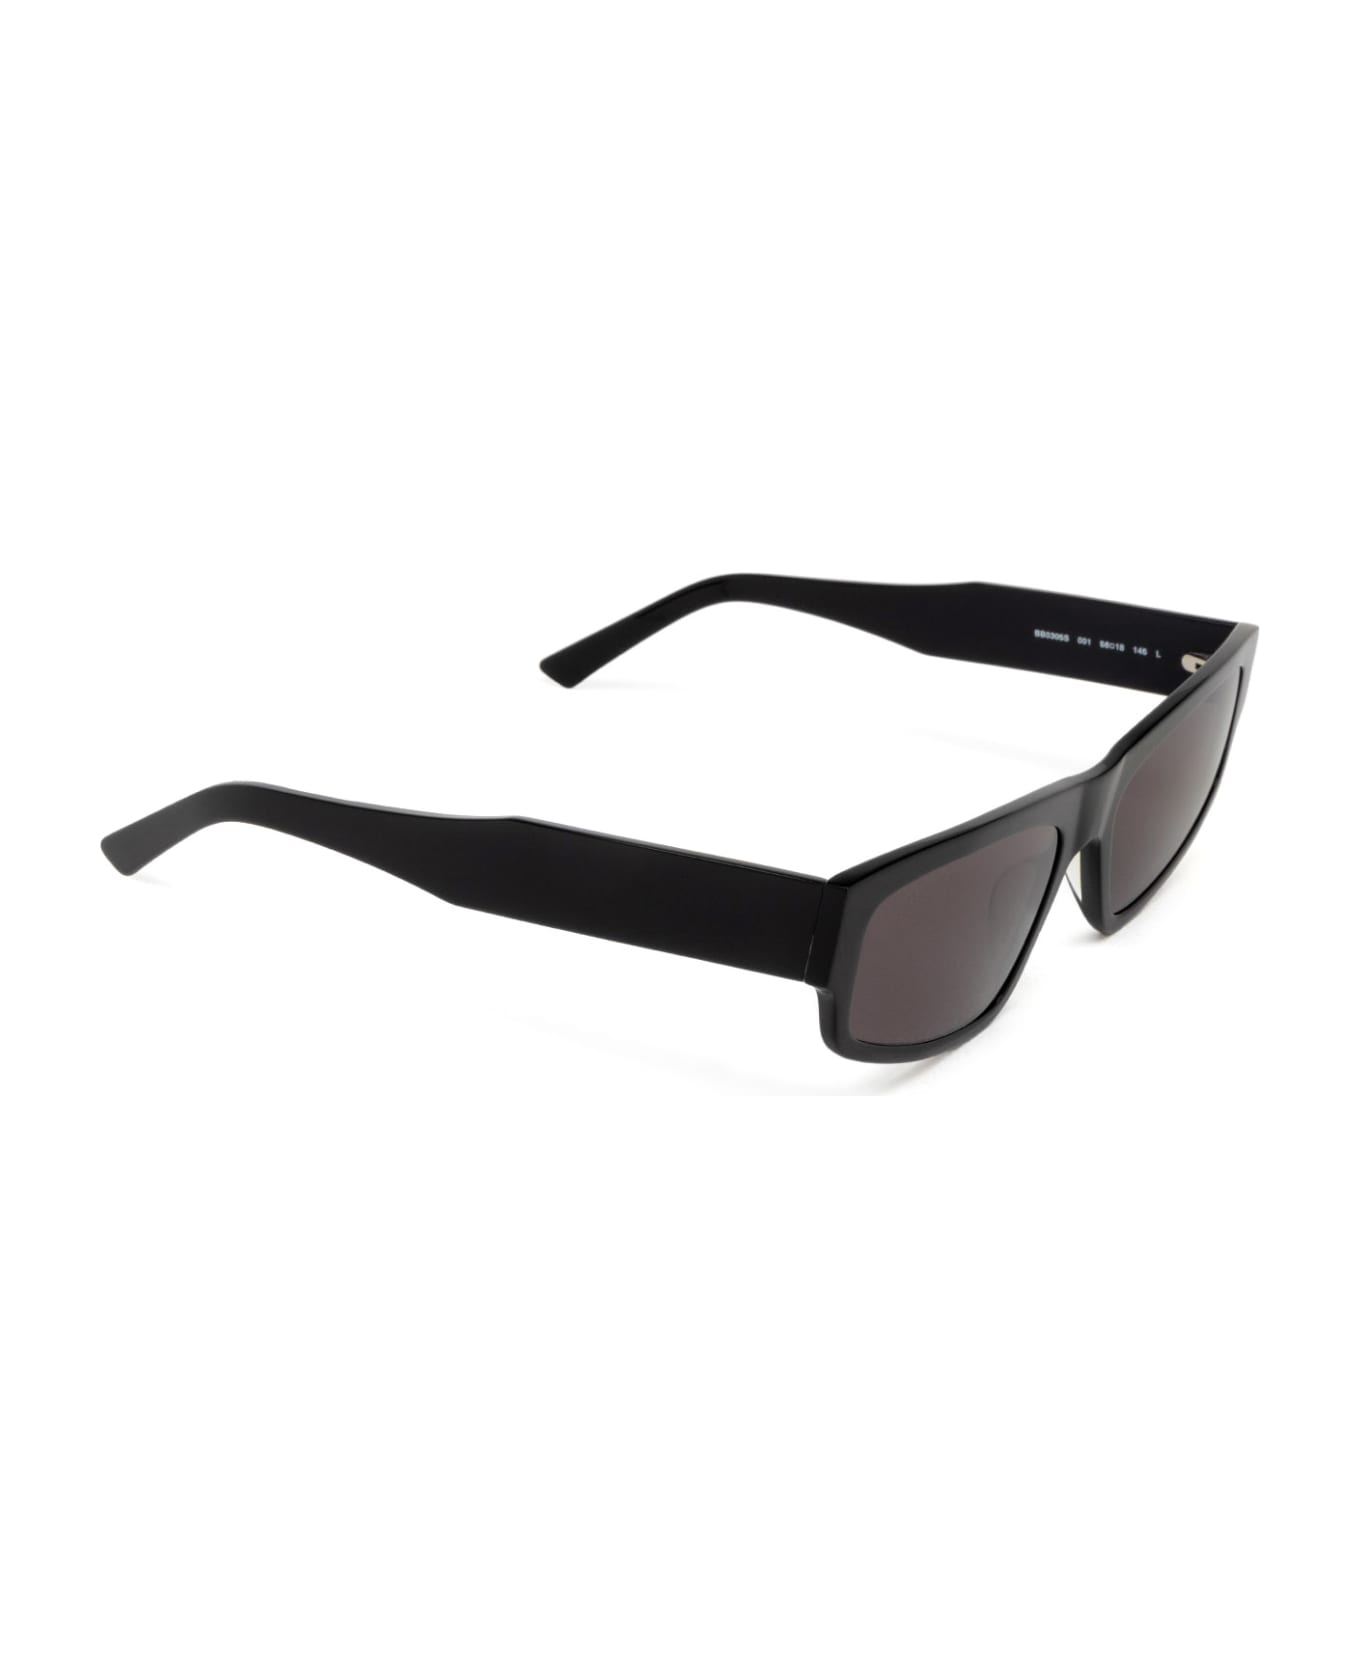 Balenciaga Eyewear Bb0305s Sunglasses - Black